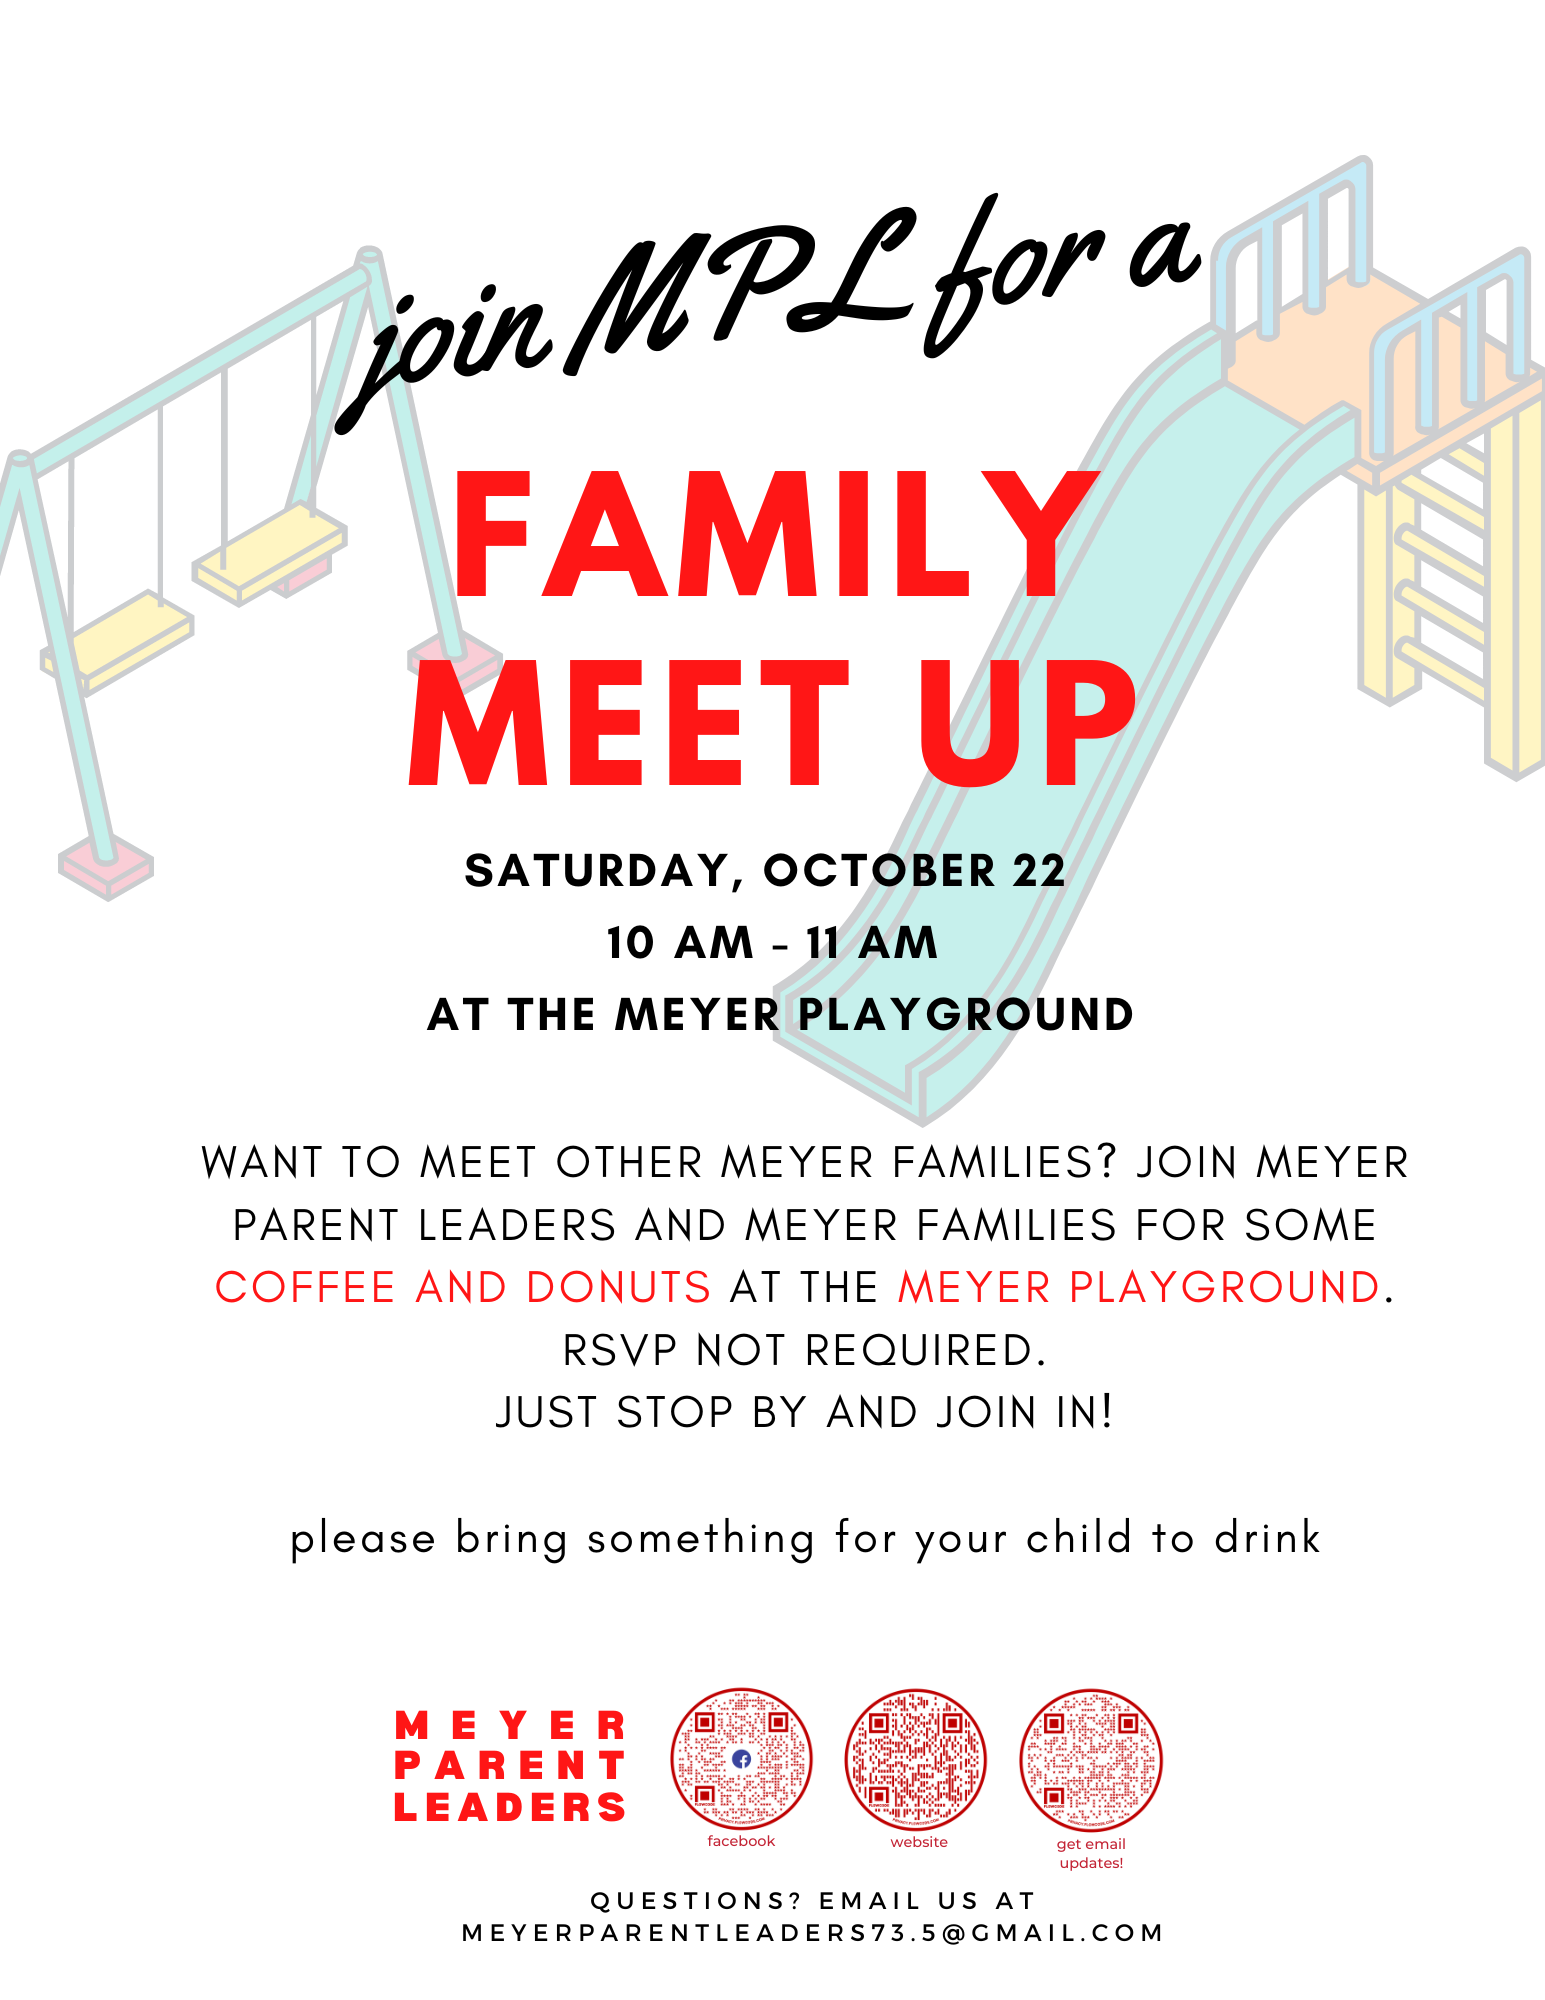 Meyer Parent Leaders - Family Meetup flyer